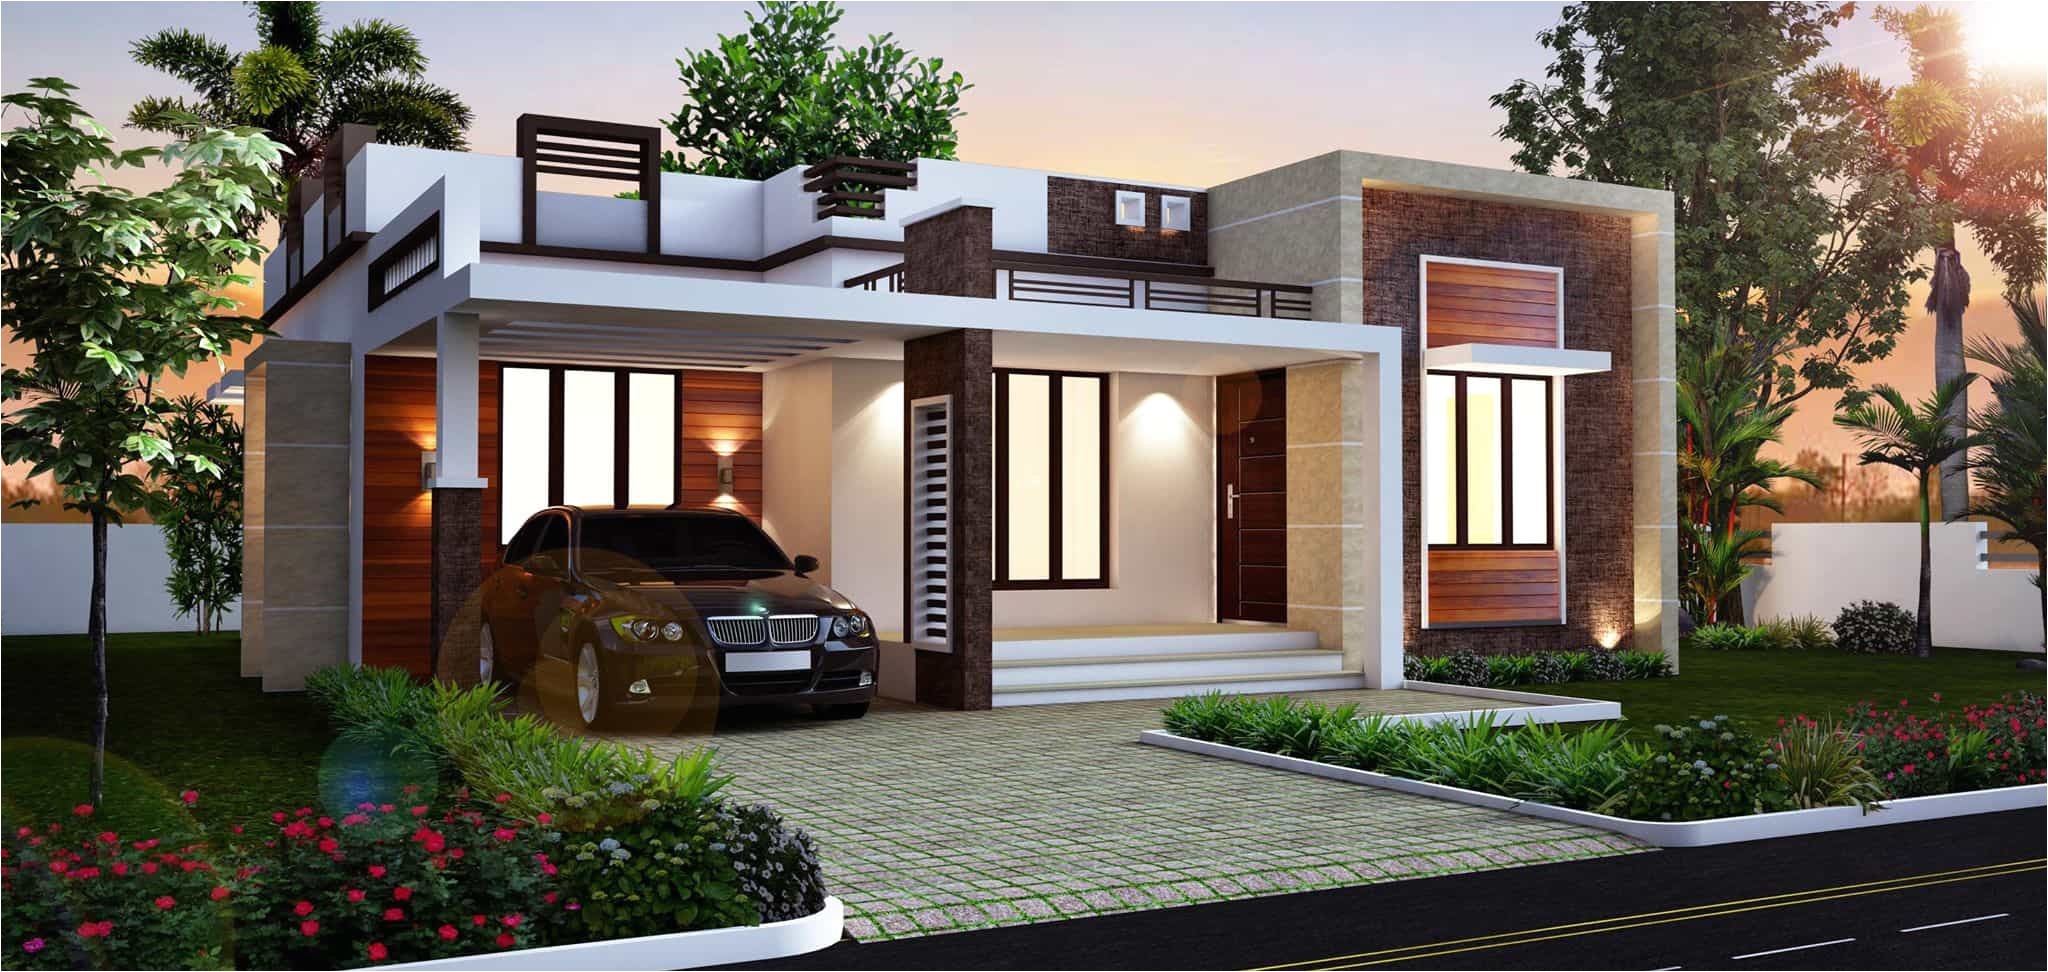 Www Home Plan Design Com Kerala Home Design House Plans Indian Budget Models